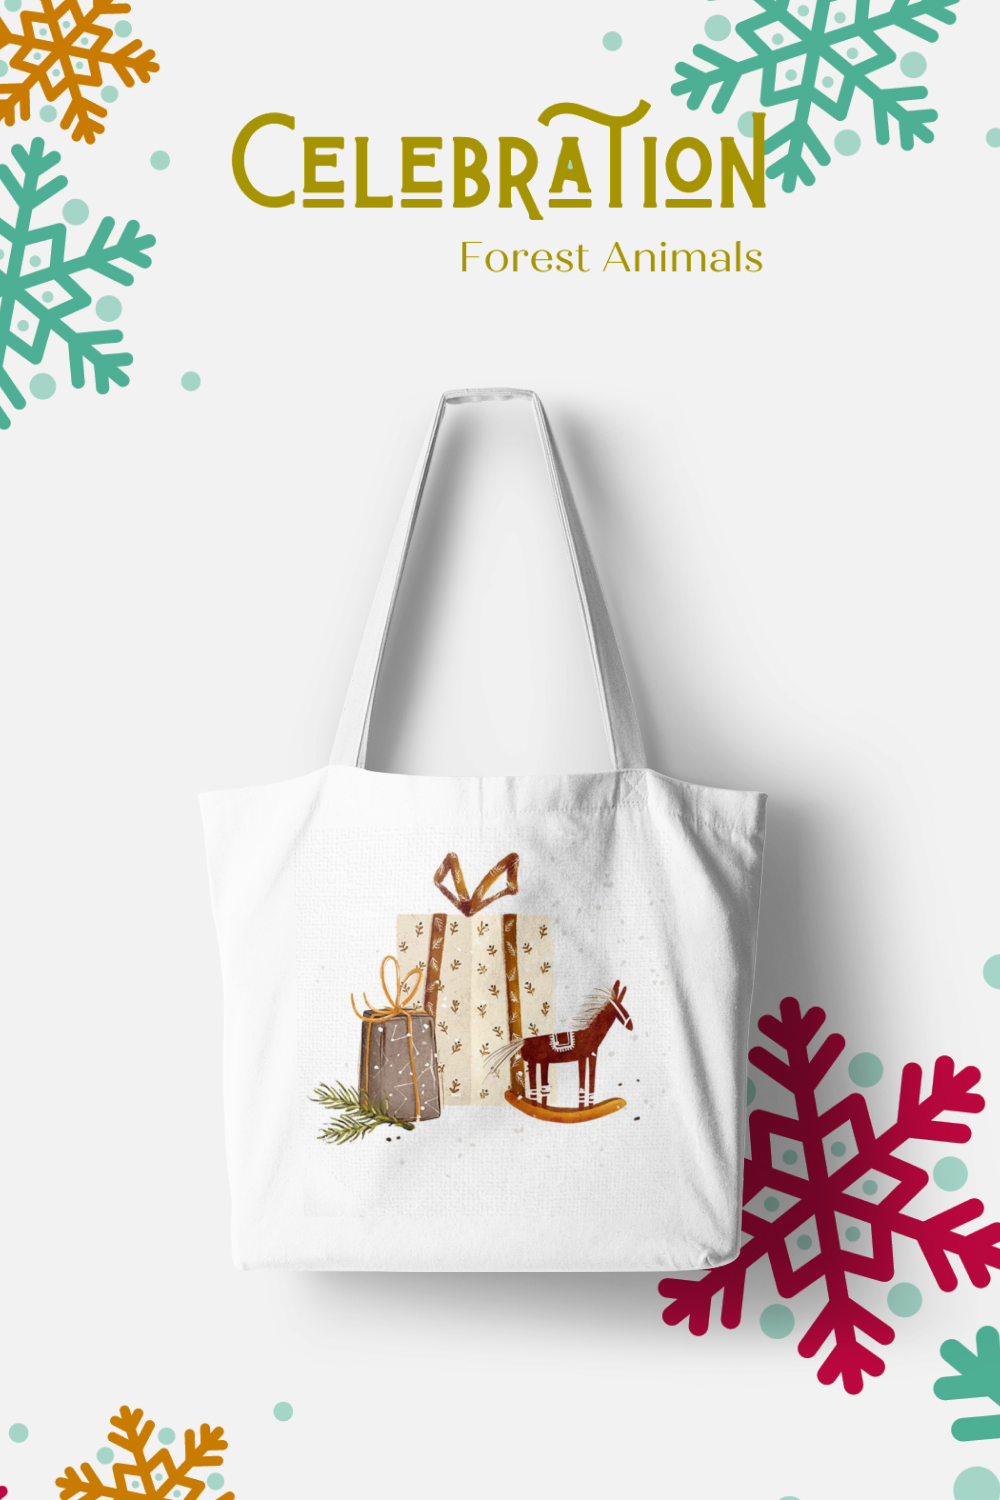 Forest Animals Celebration - Pinterest.